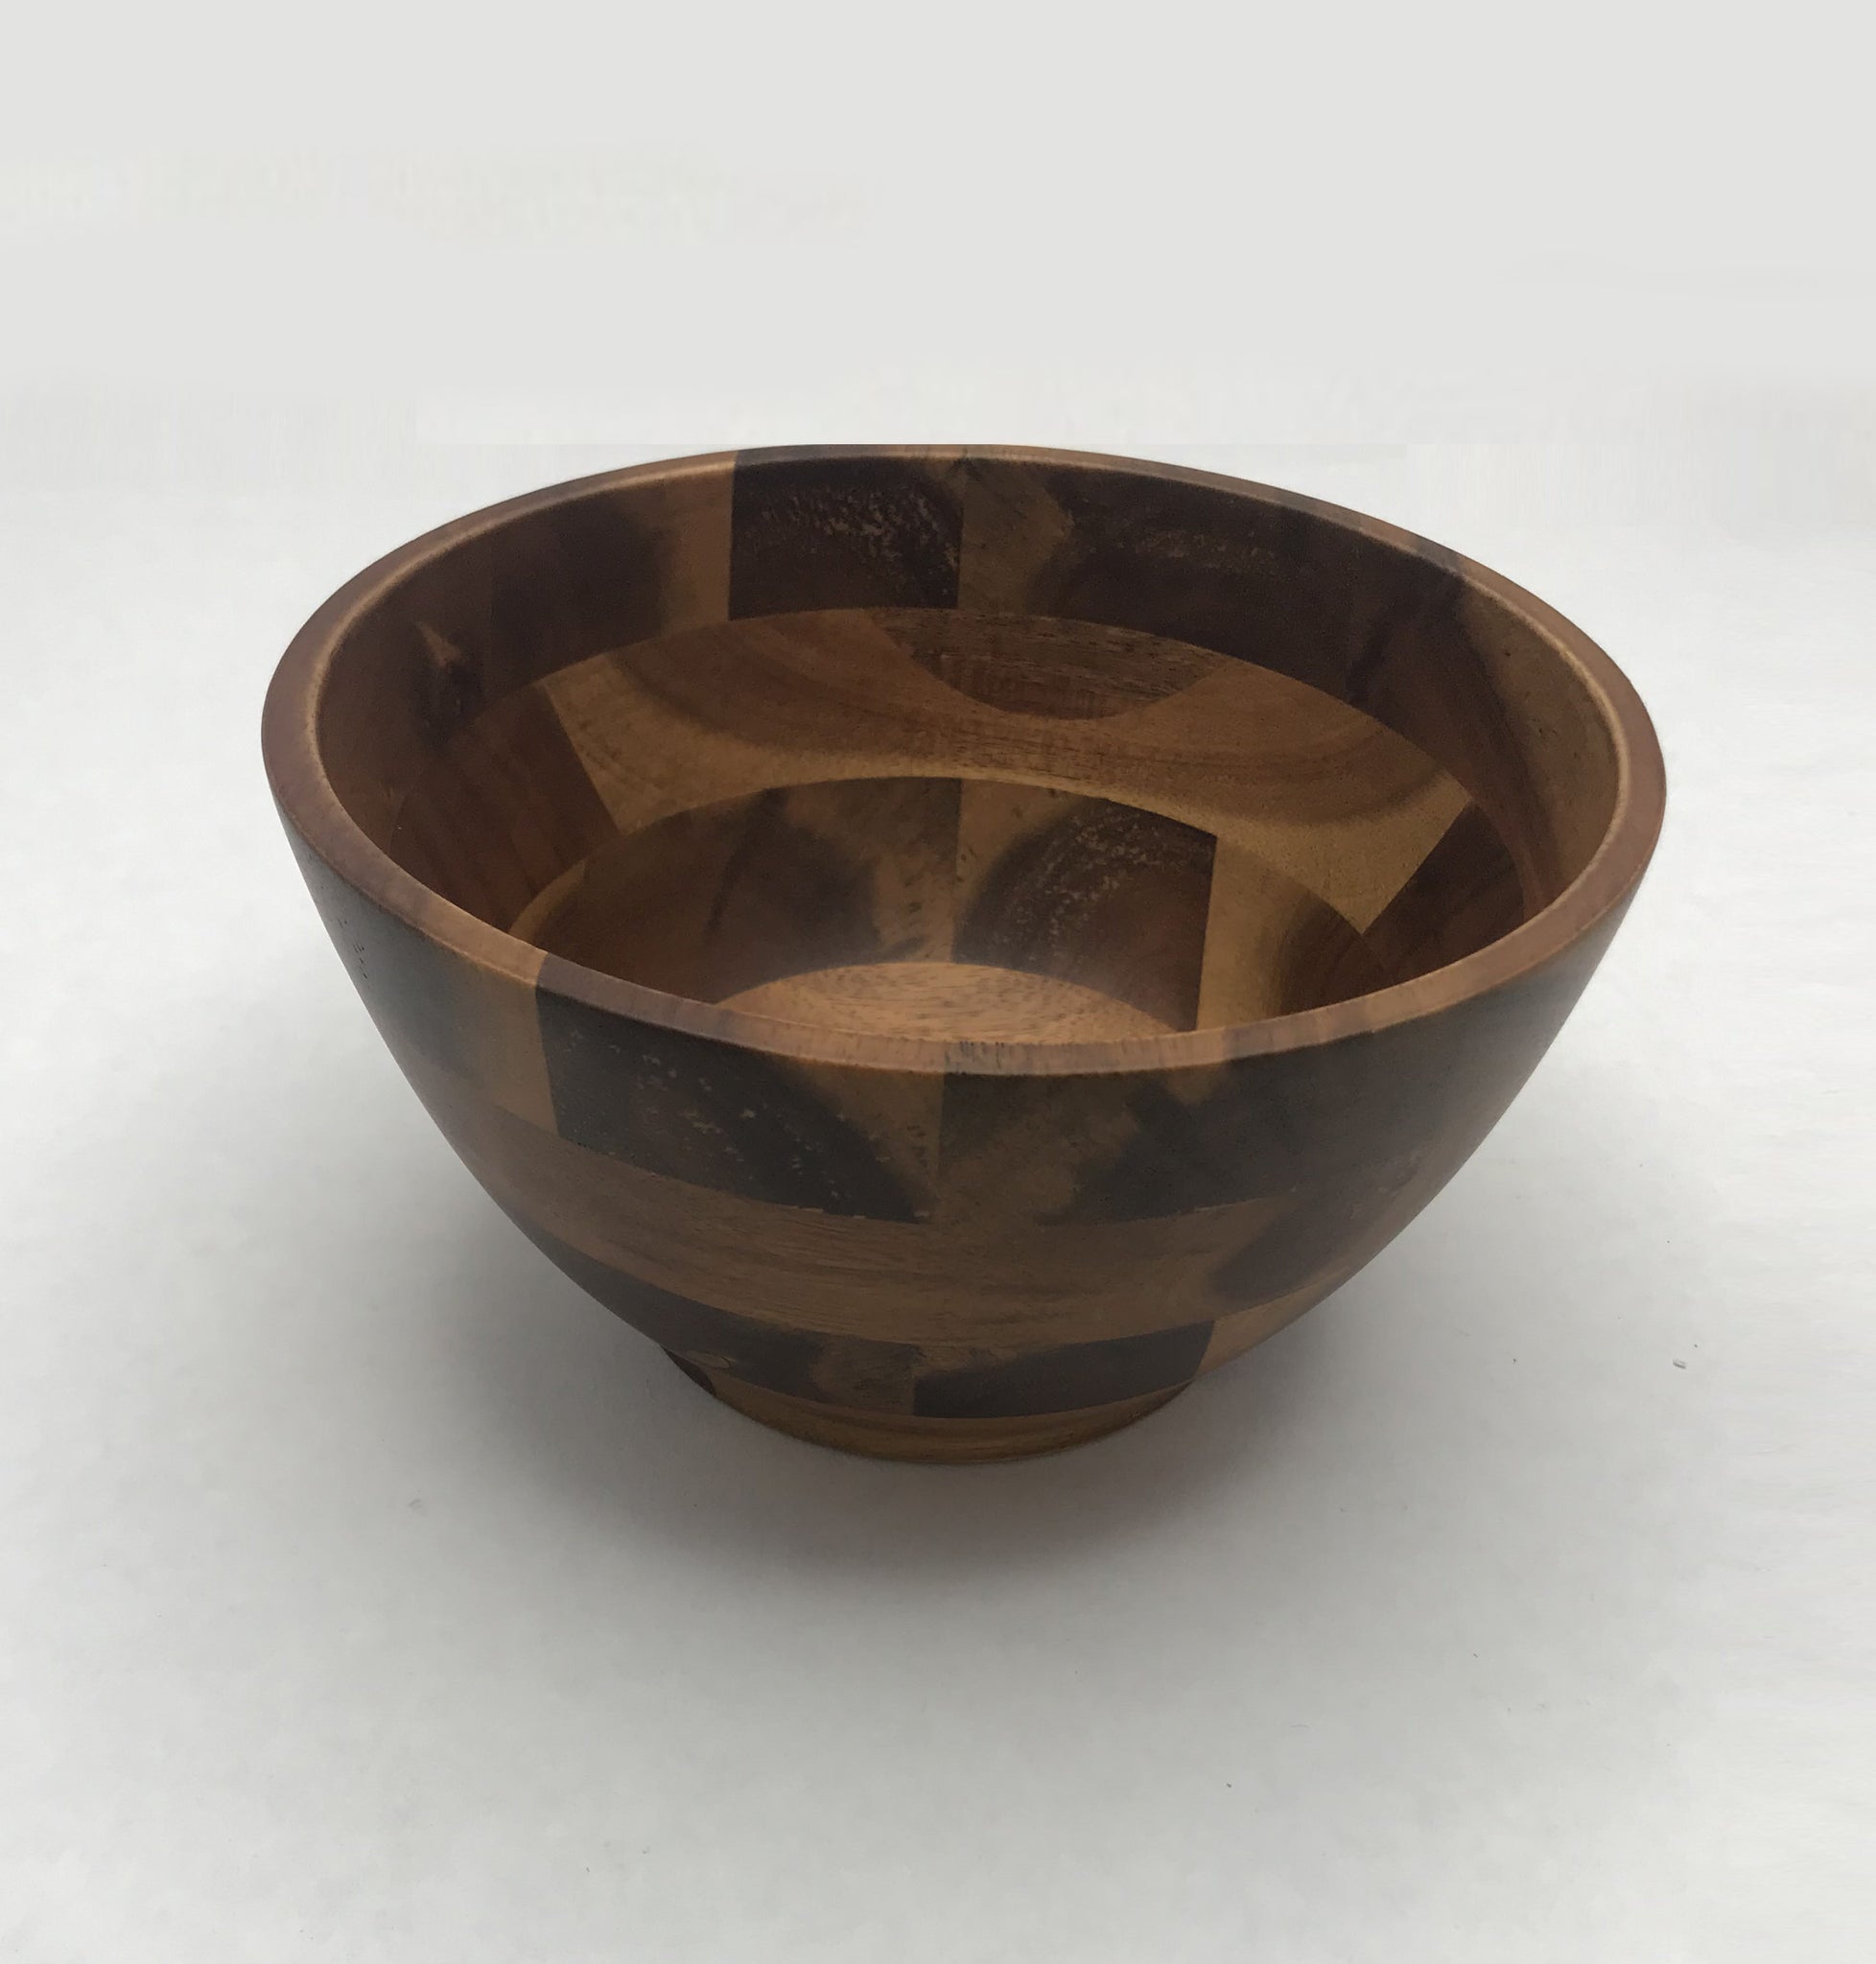 Acacia round bowl 6" Diameter